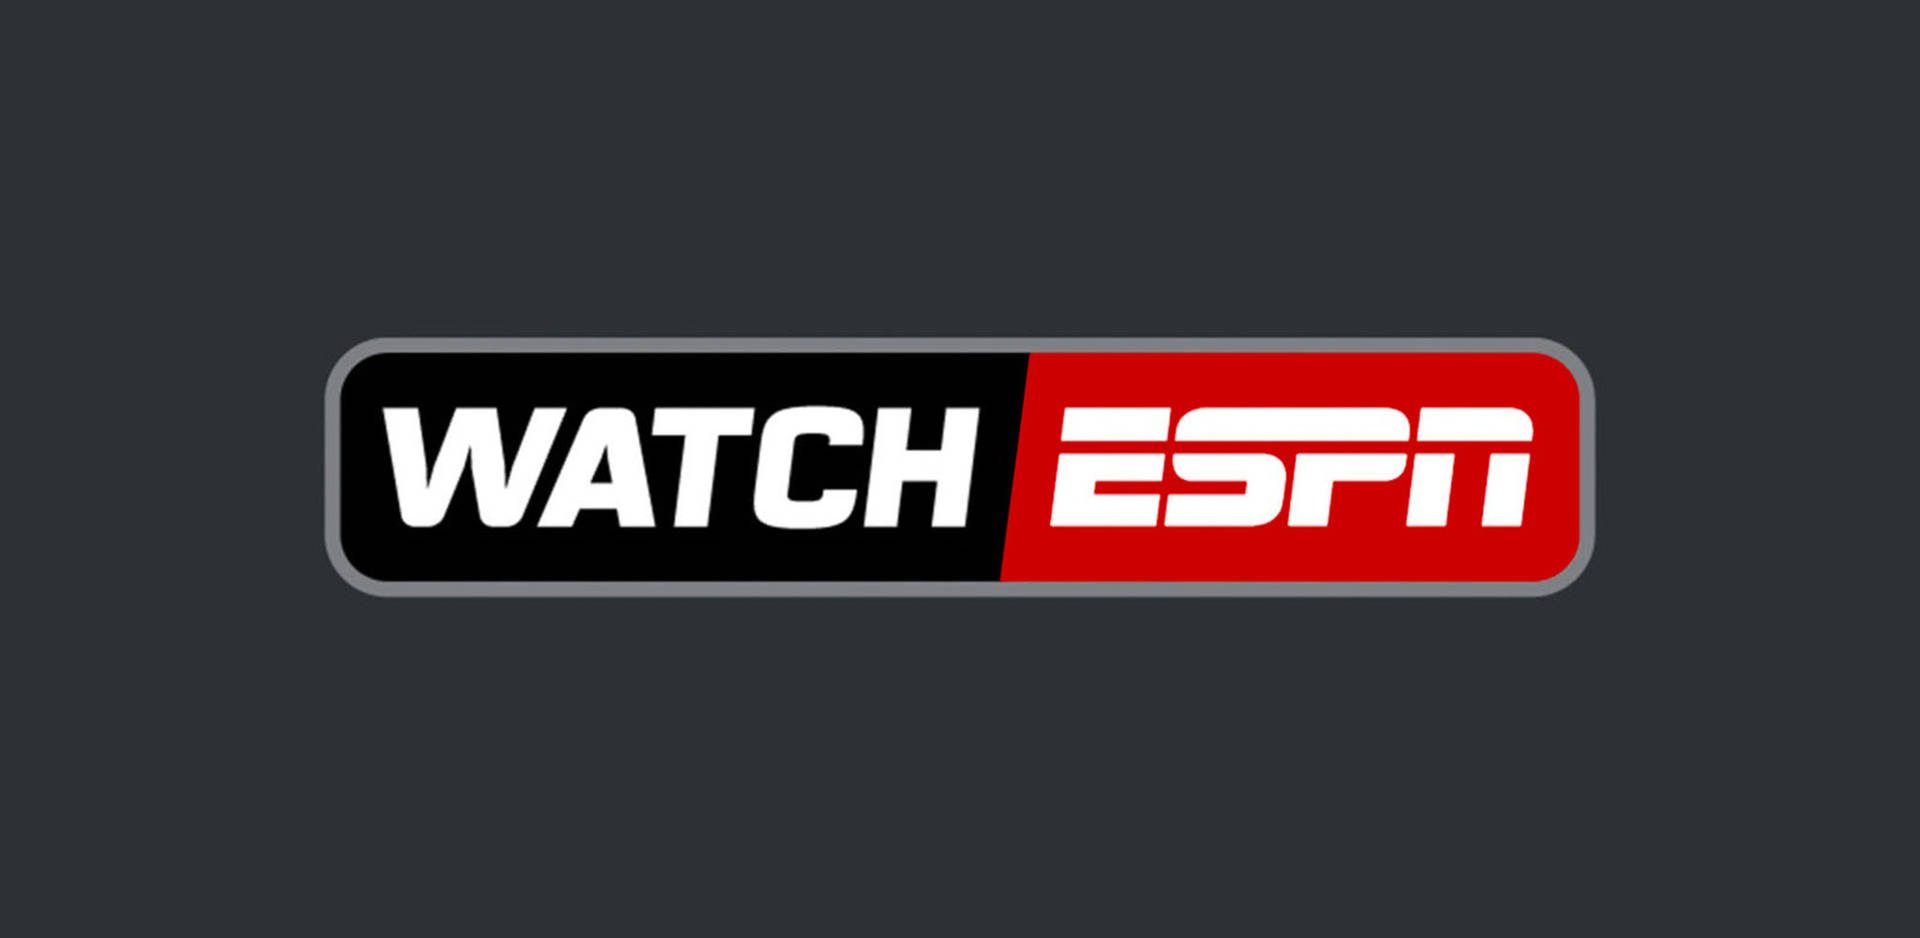 Watch ESPN Logo Wallpaper